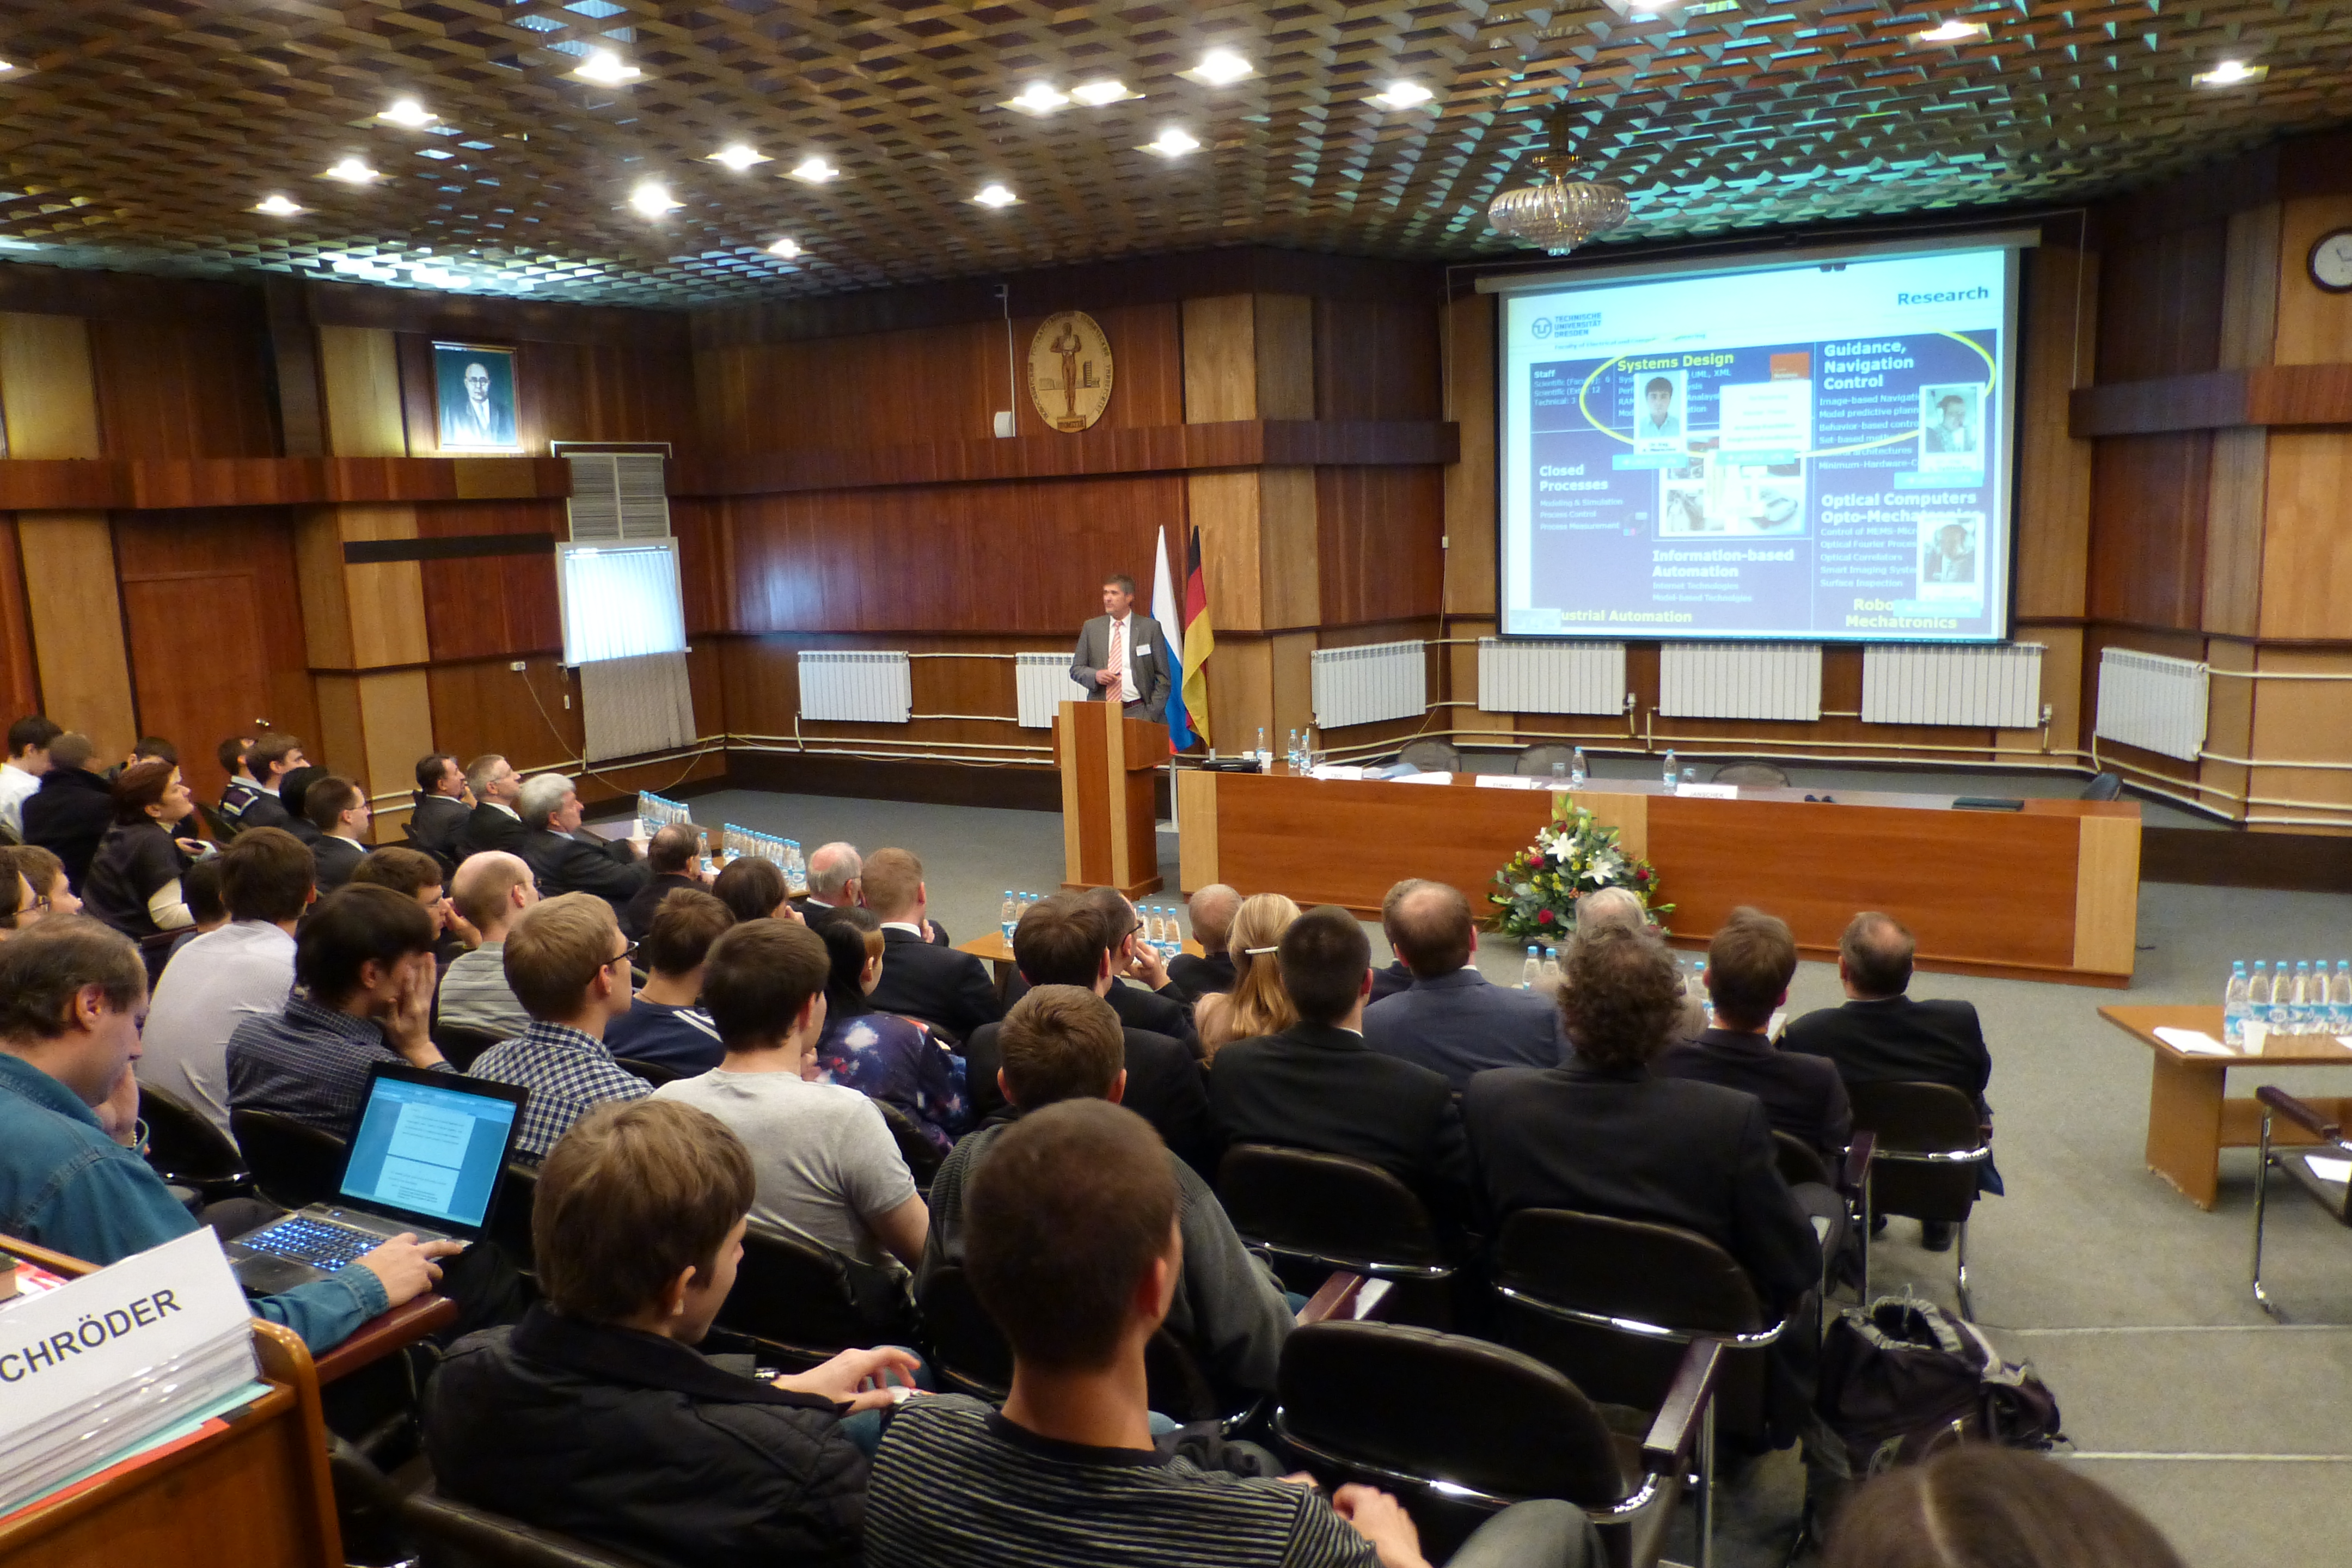 Presentation by Prof. Klaus Janschek (Technical University of Dresden)